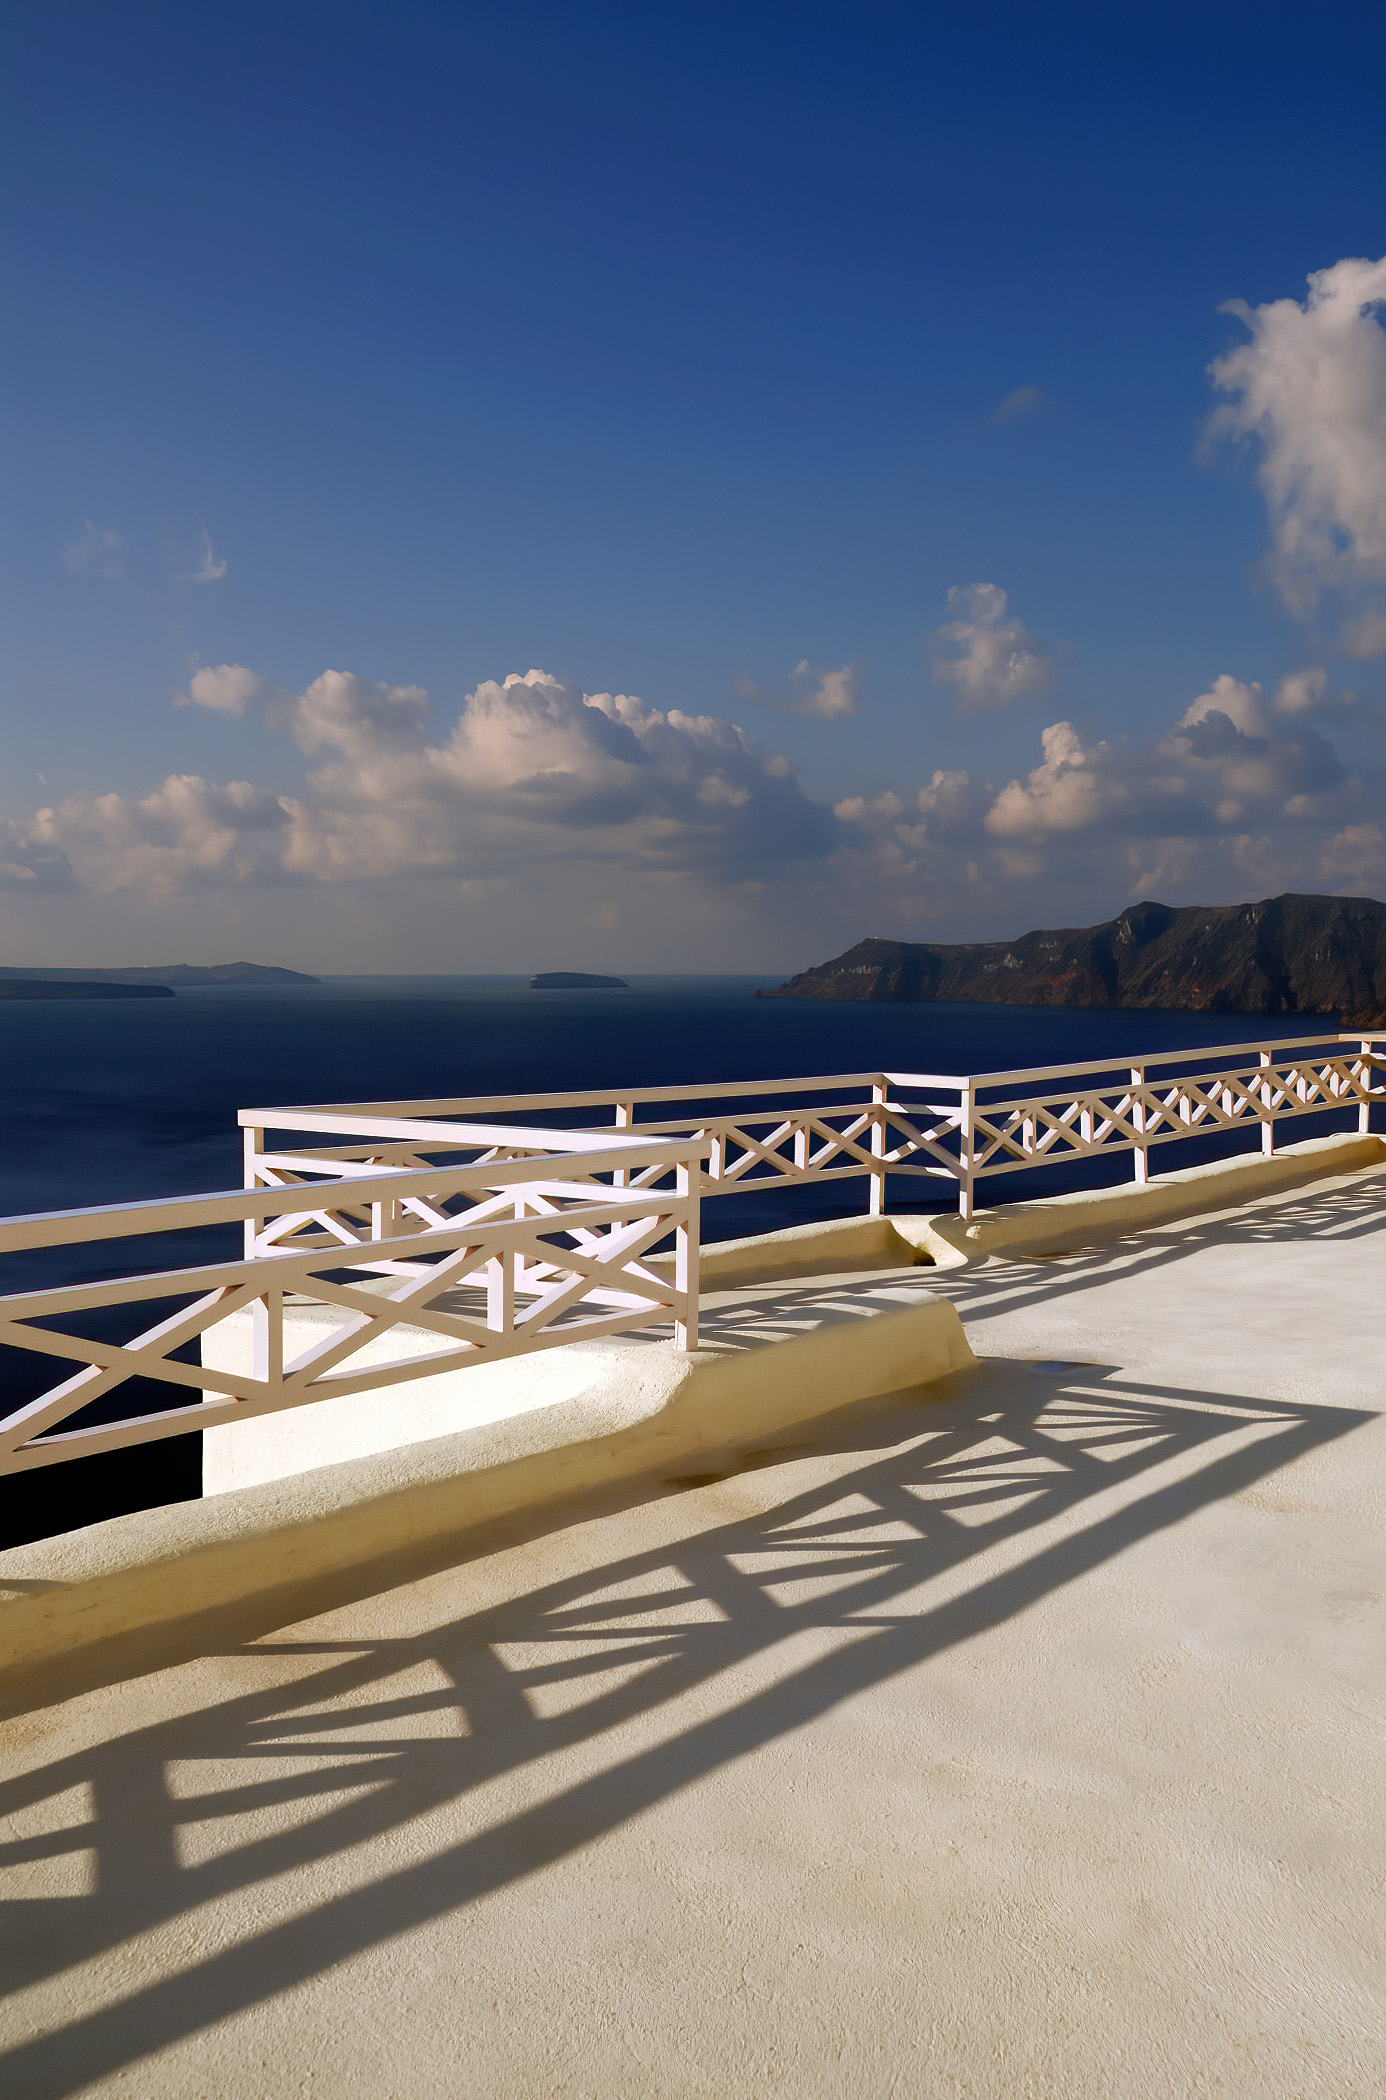 Mystique Hotel Santorini – Oia, Santorini Island, Greece – Exterior Walkway Railing